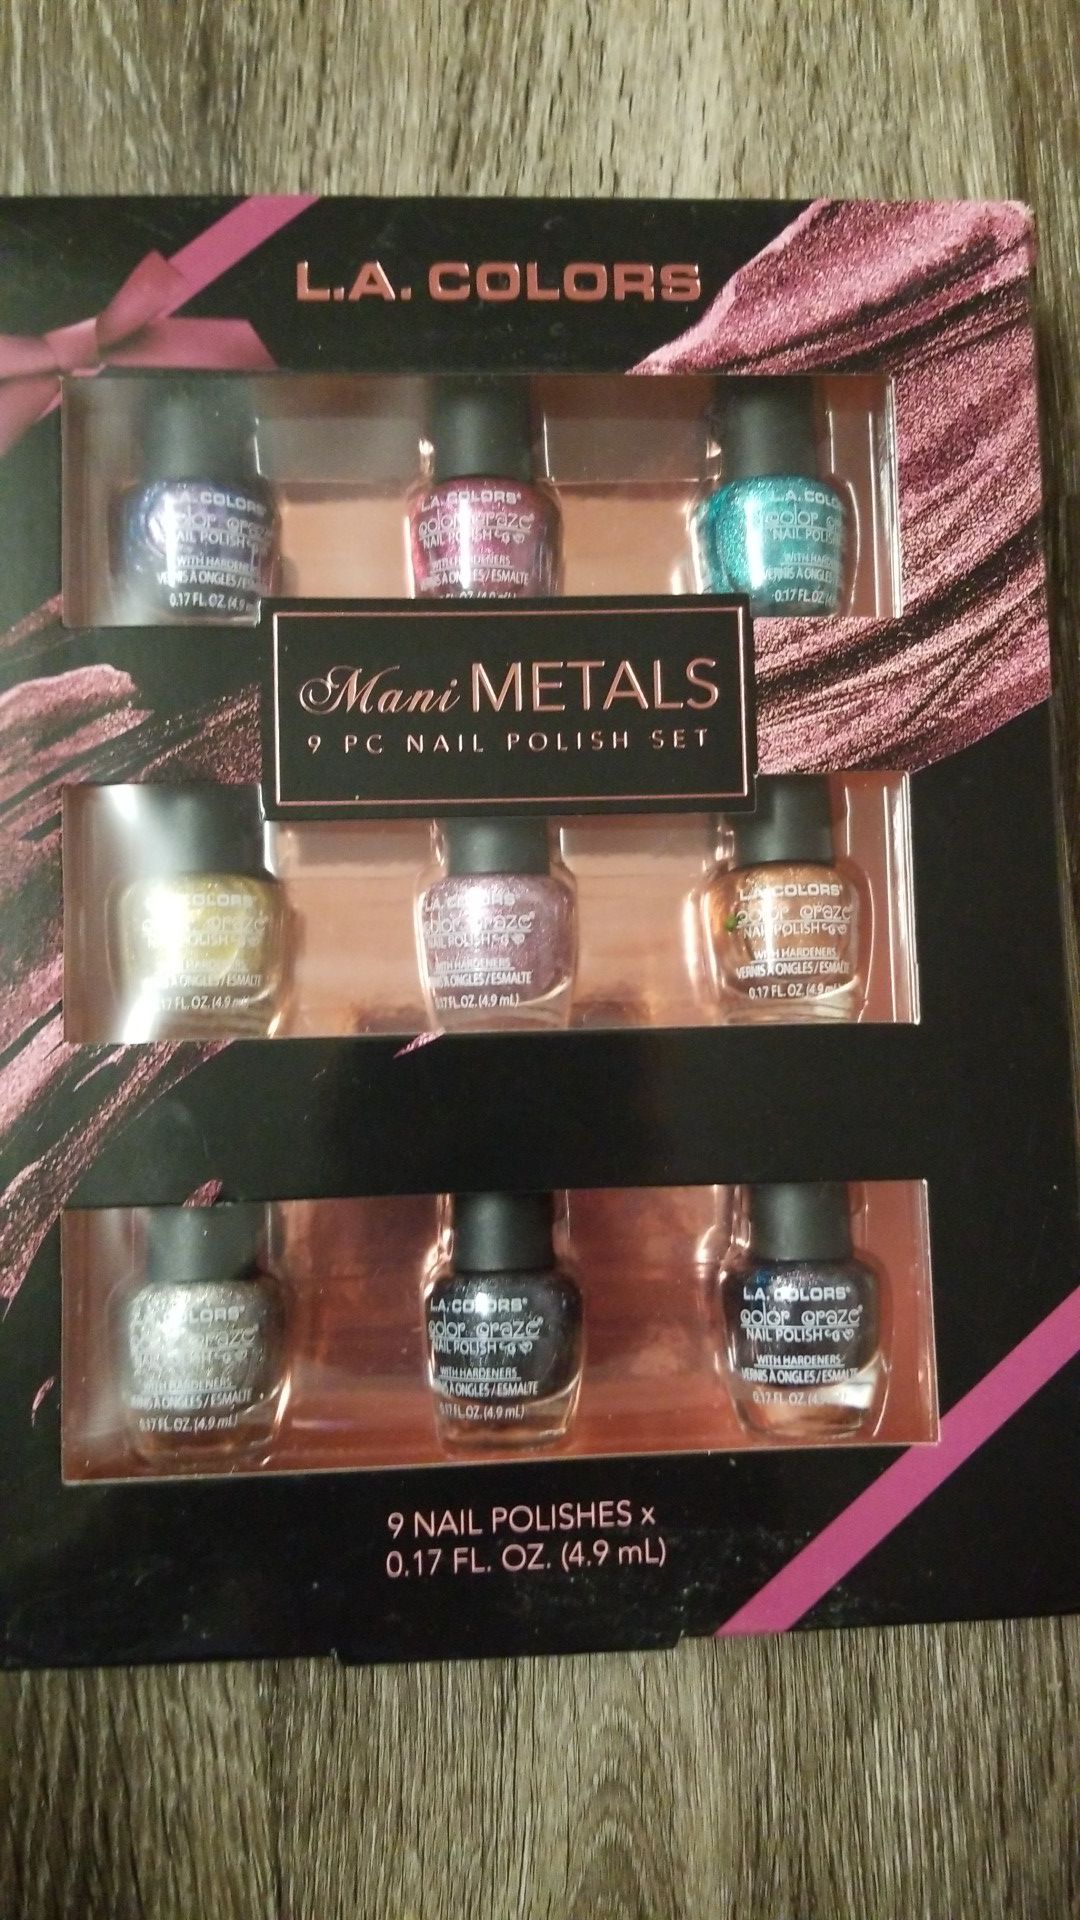 La colors nail polish set